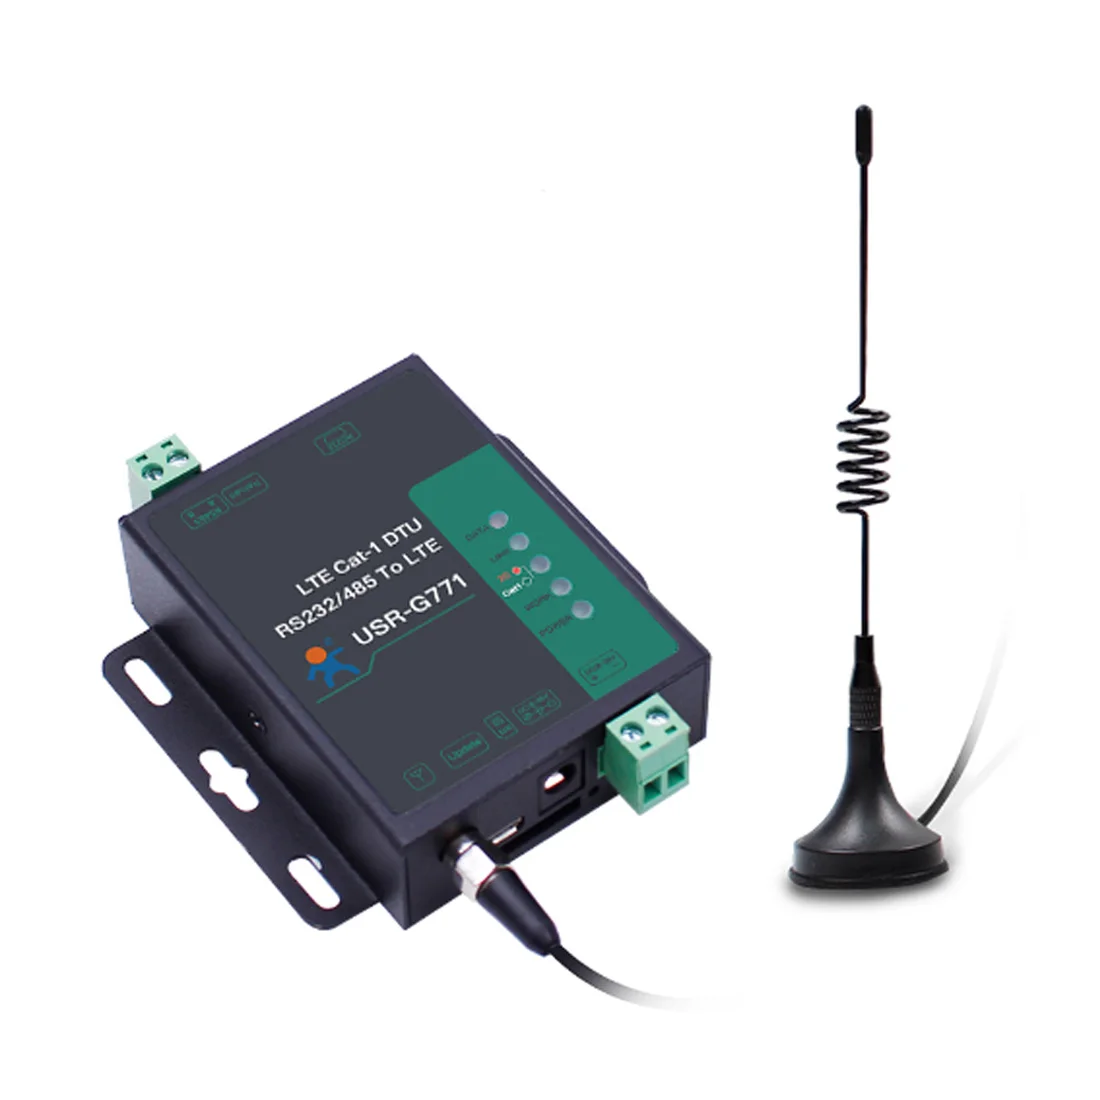 USR-G771-E Modbus RTU to TCP Version / RS232 or RS485 / MQTT/SSL Version Serial to Cellular 4G LTE CAT1 Modem with SIM Card